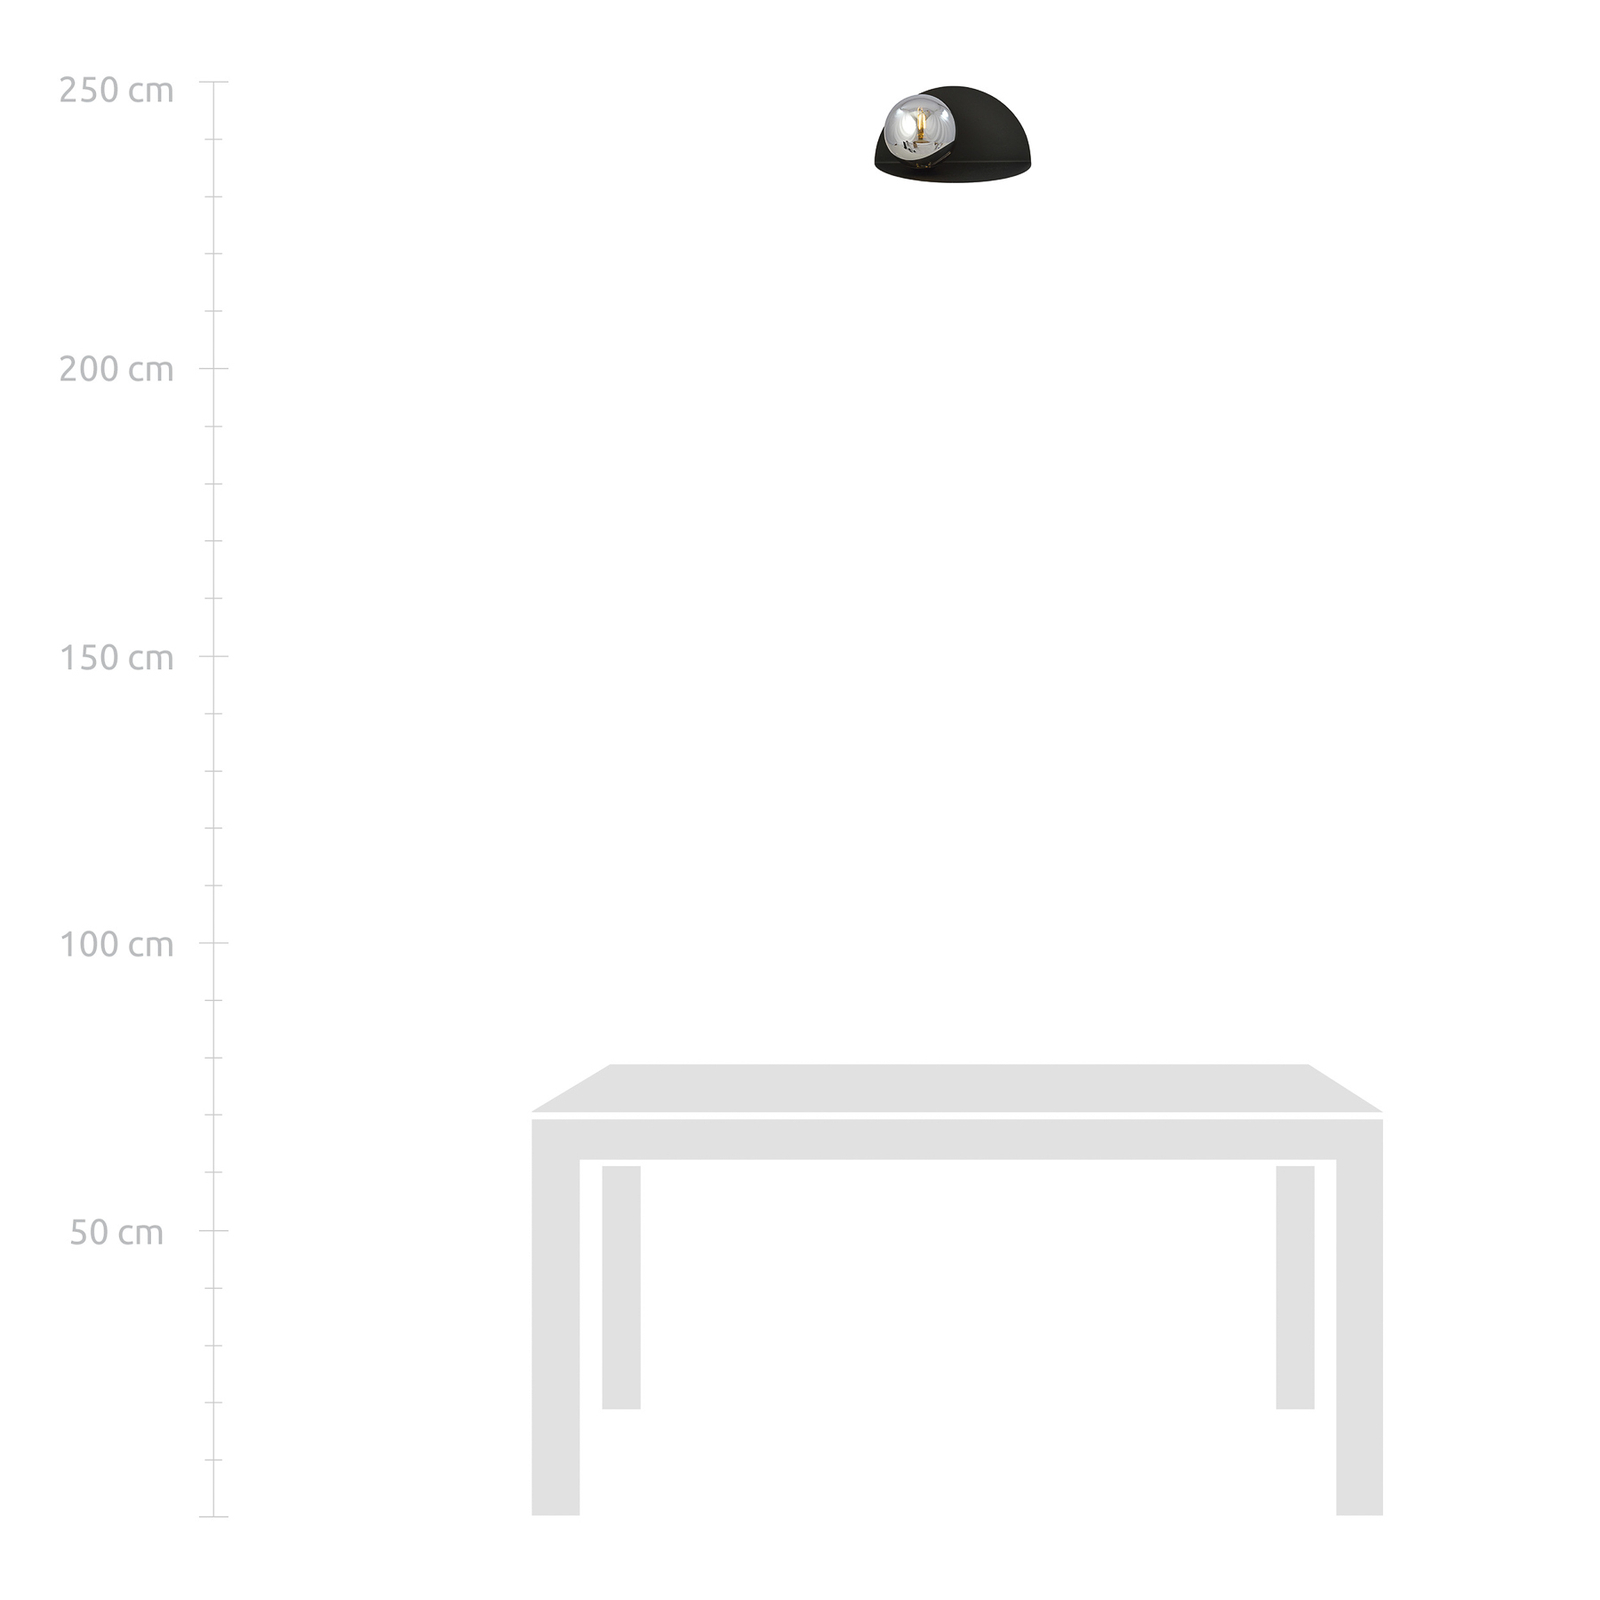 Wandlamp vorm 8, 30 cm x 15 cm, zwart/grafiet